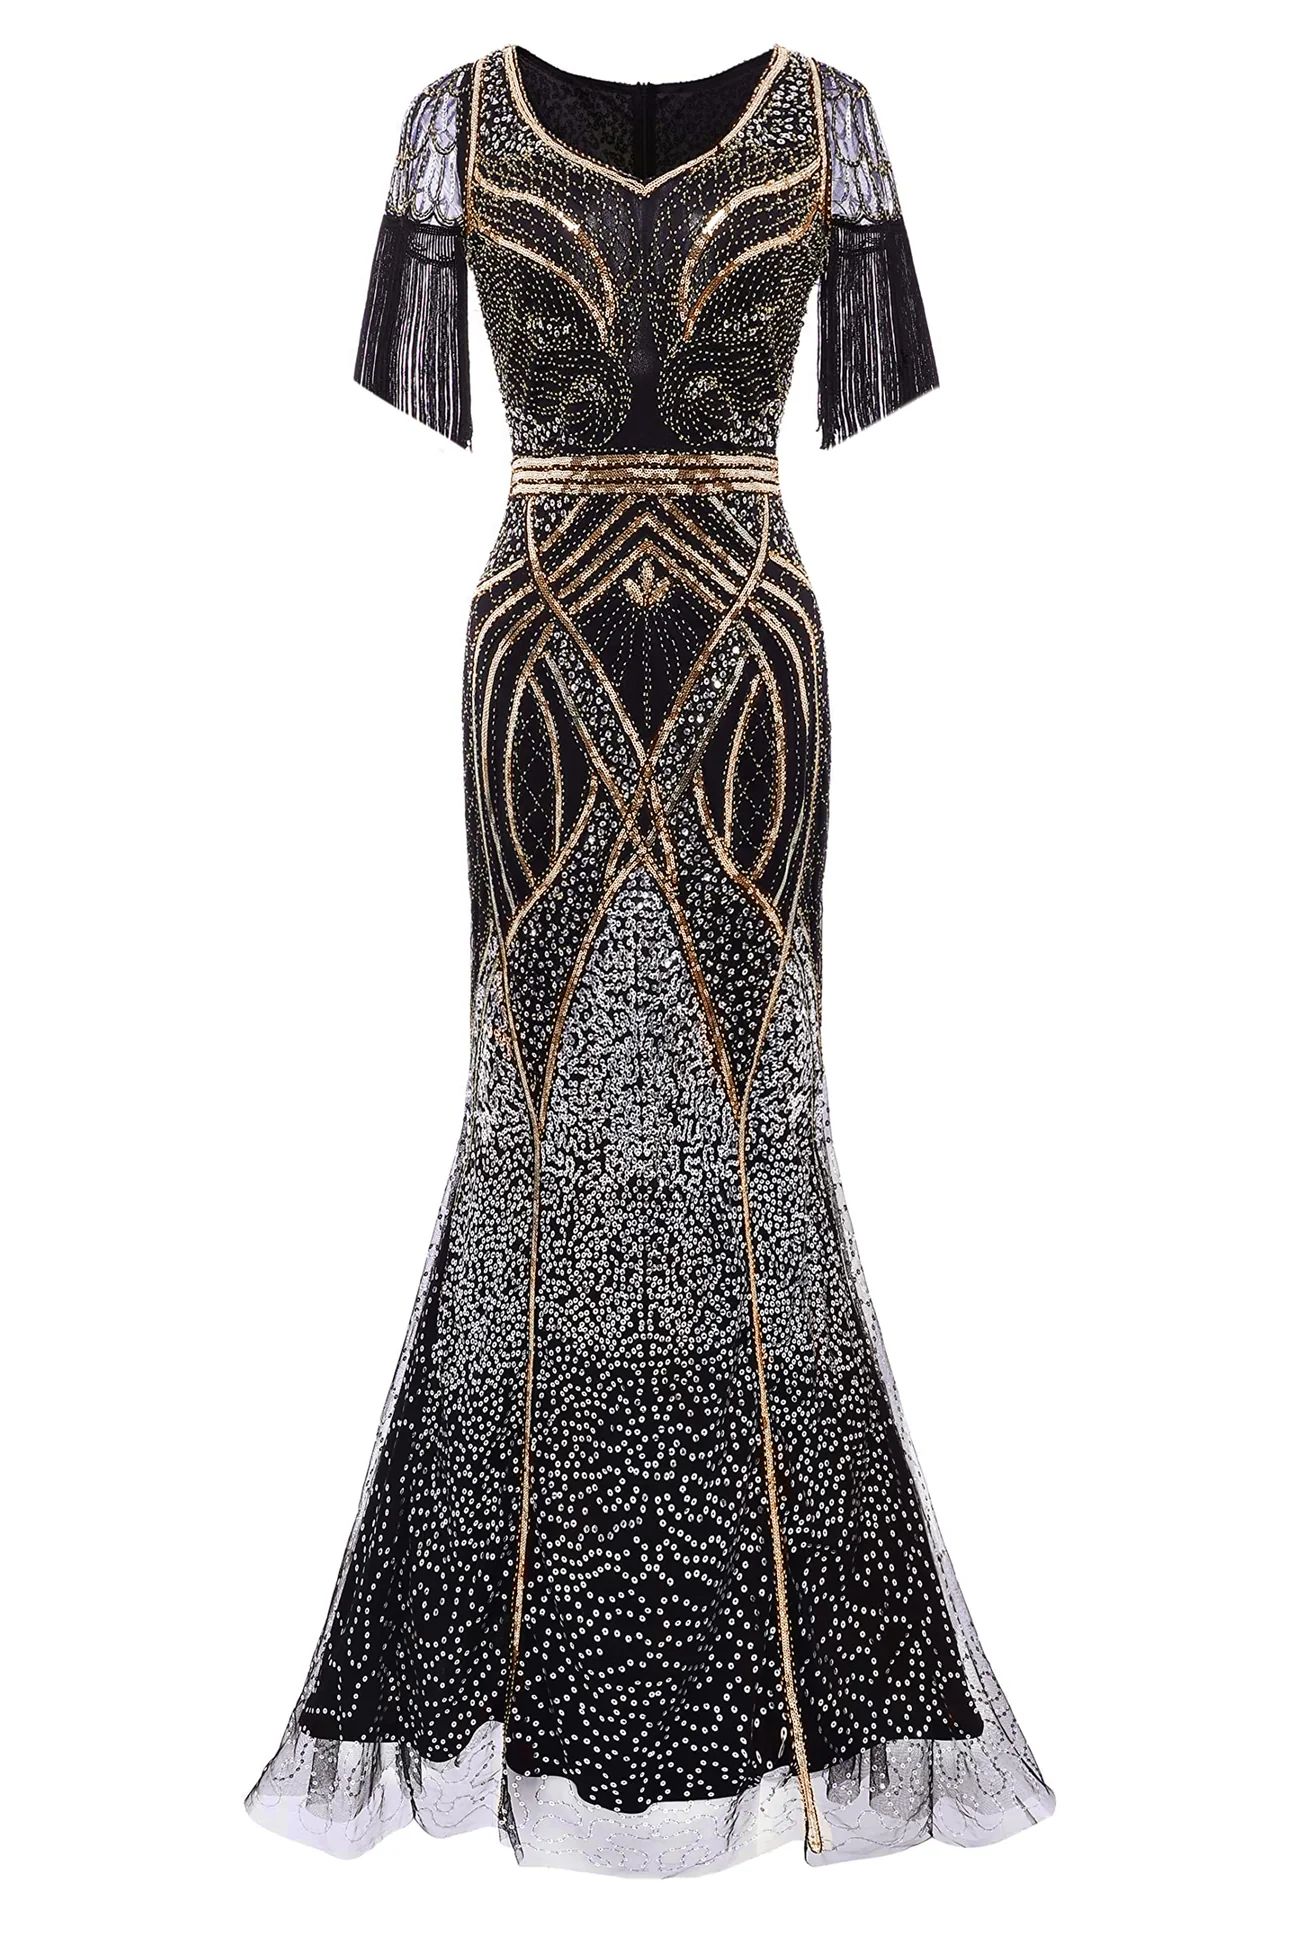 Shop 1920s Dresses - Mermaid Maxi Cocktail Dress | BABEYOND | BABEYOND